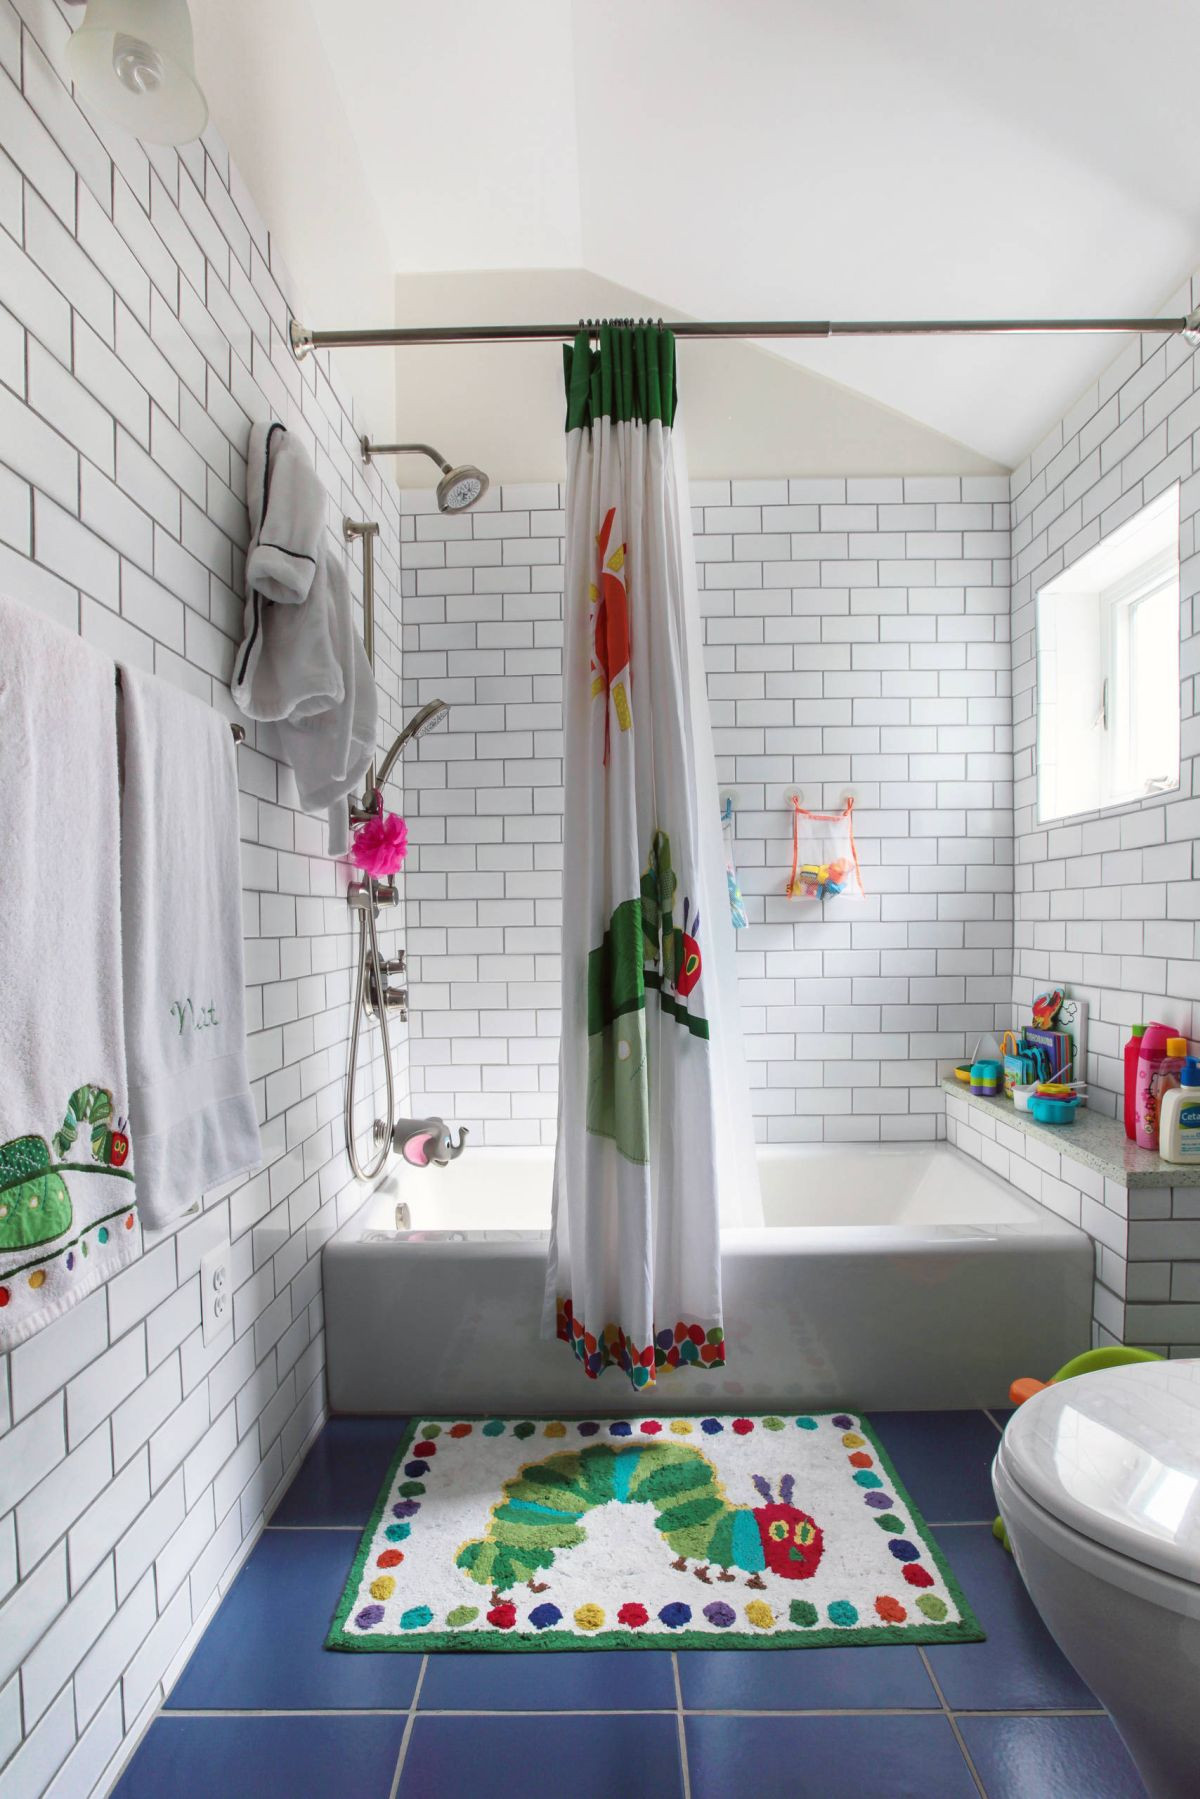 Child Bathroom Decor
 12 Tips for The Best Kids Bathroom Decor